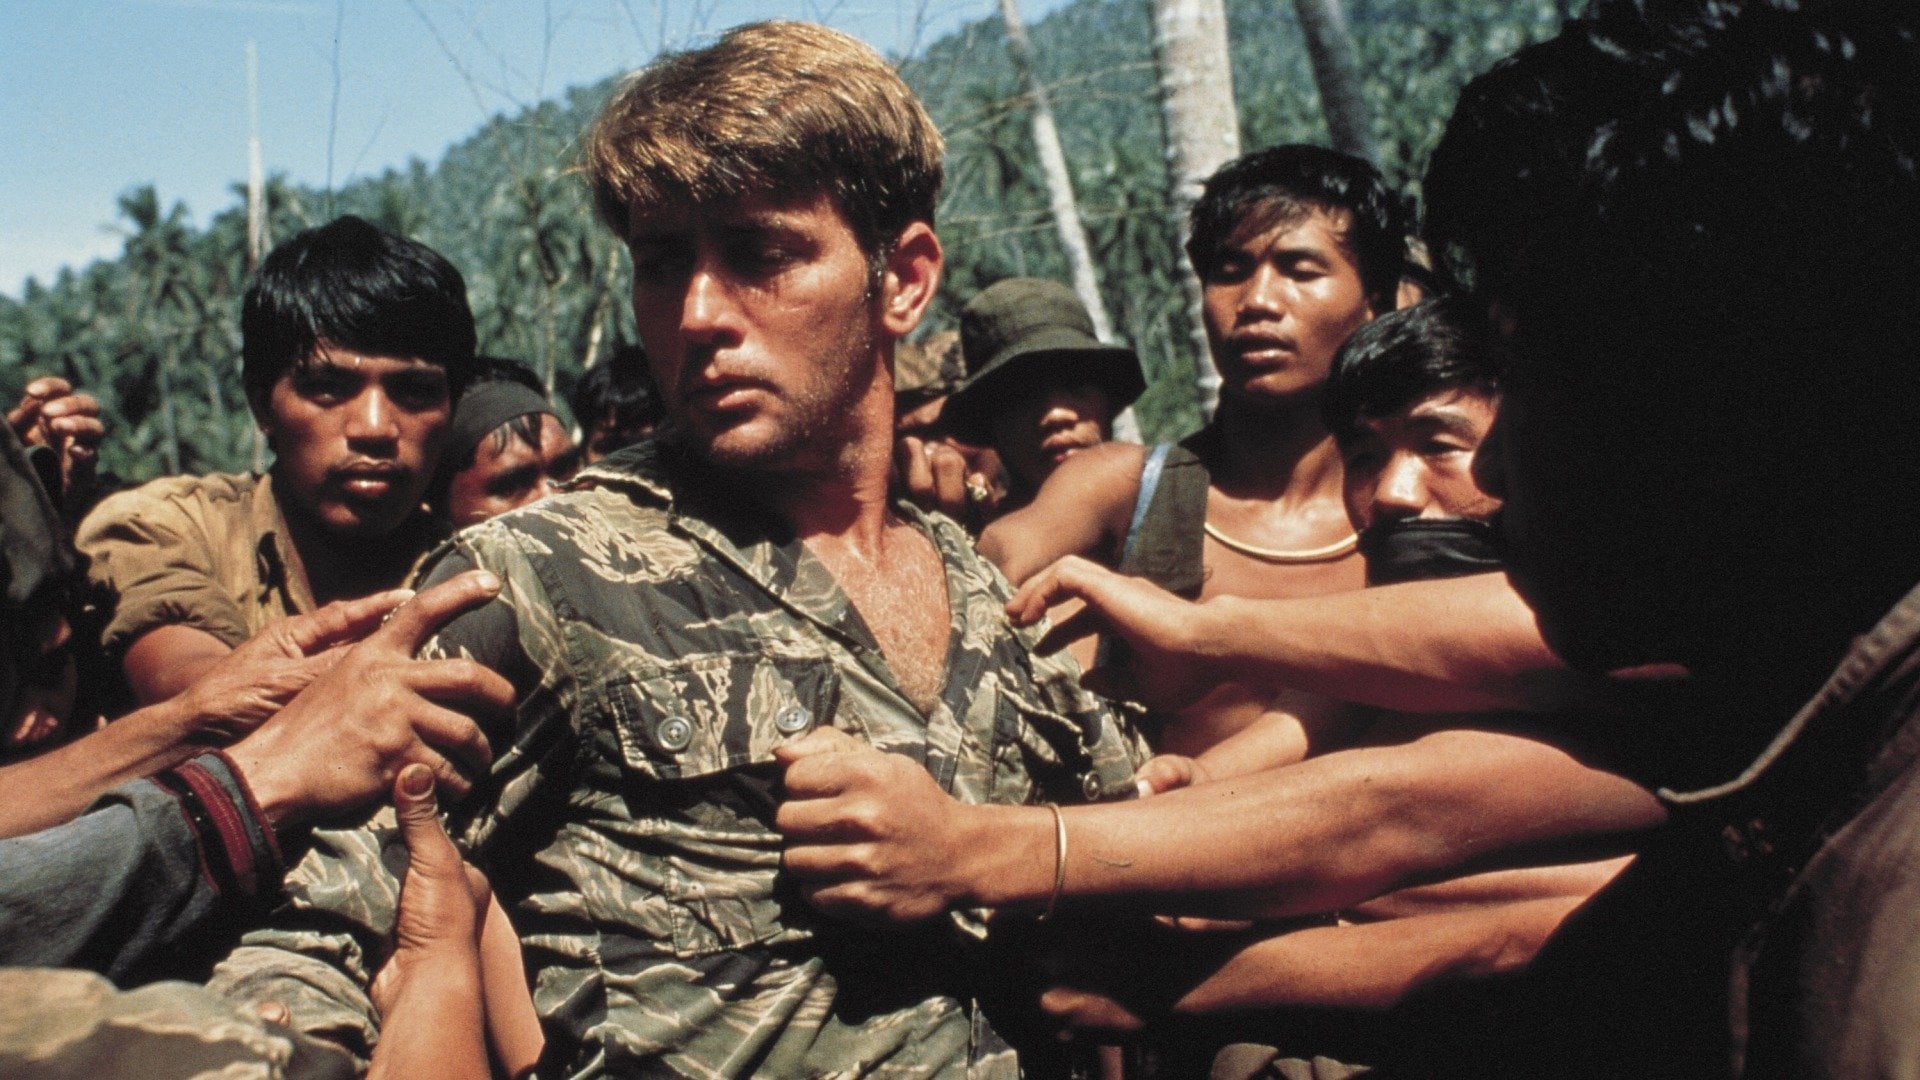 Image du film Apocalypse Now irkkaeflxo44t6dthux3dhjfohvjpg